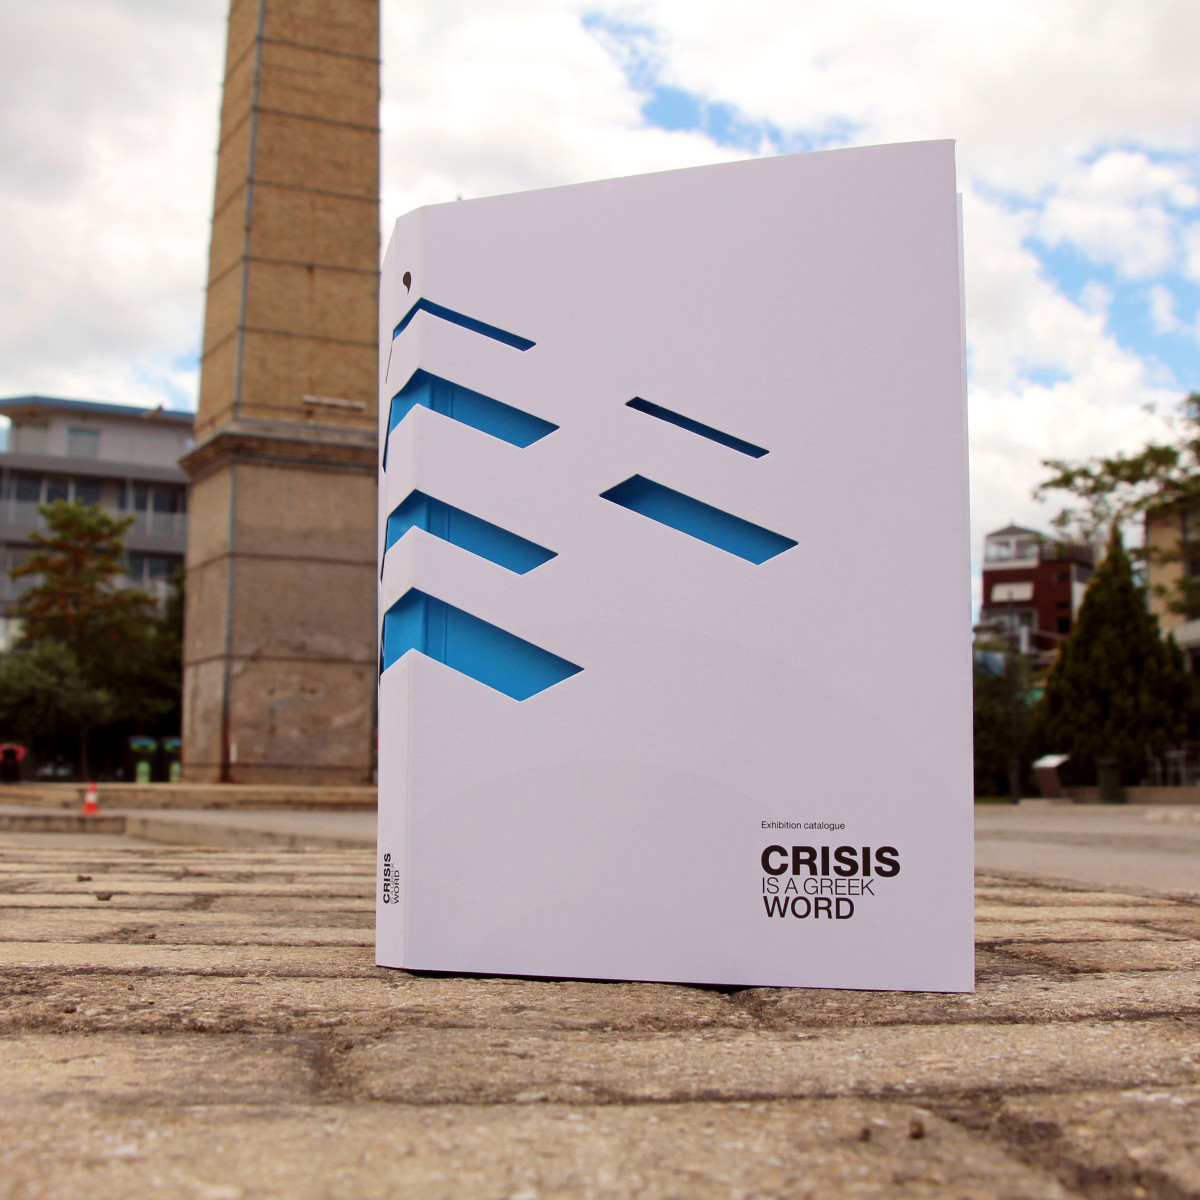 Crisis is a Greek word Exhibition Catalogue by Asprimera design studio